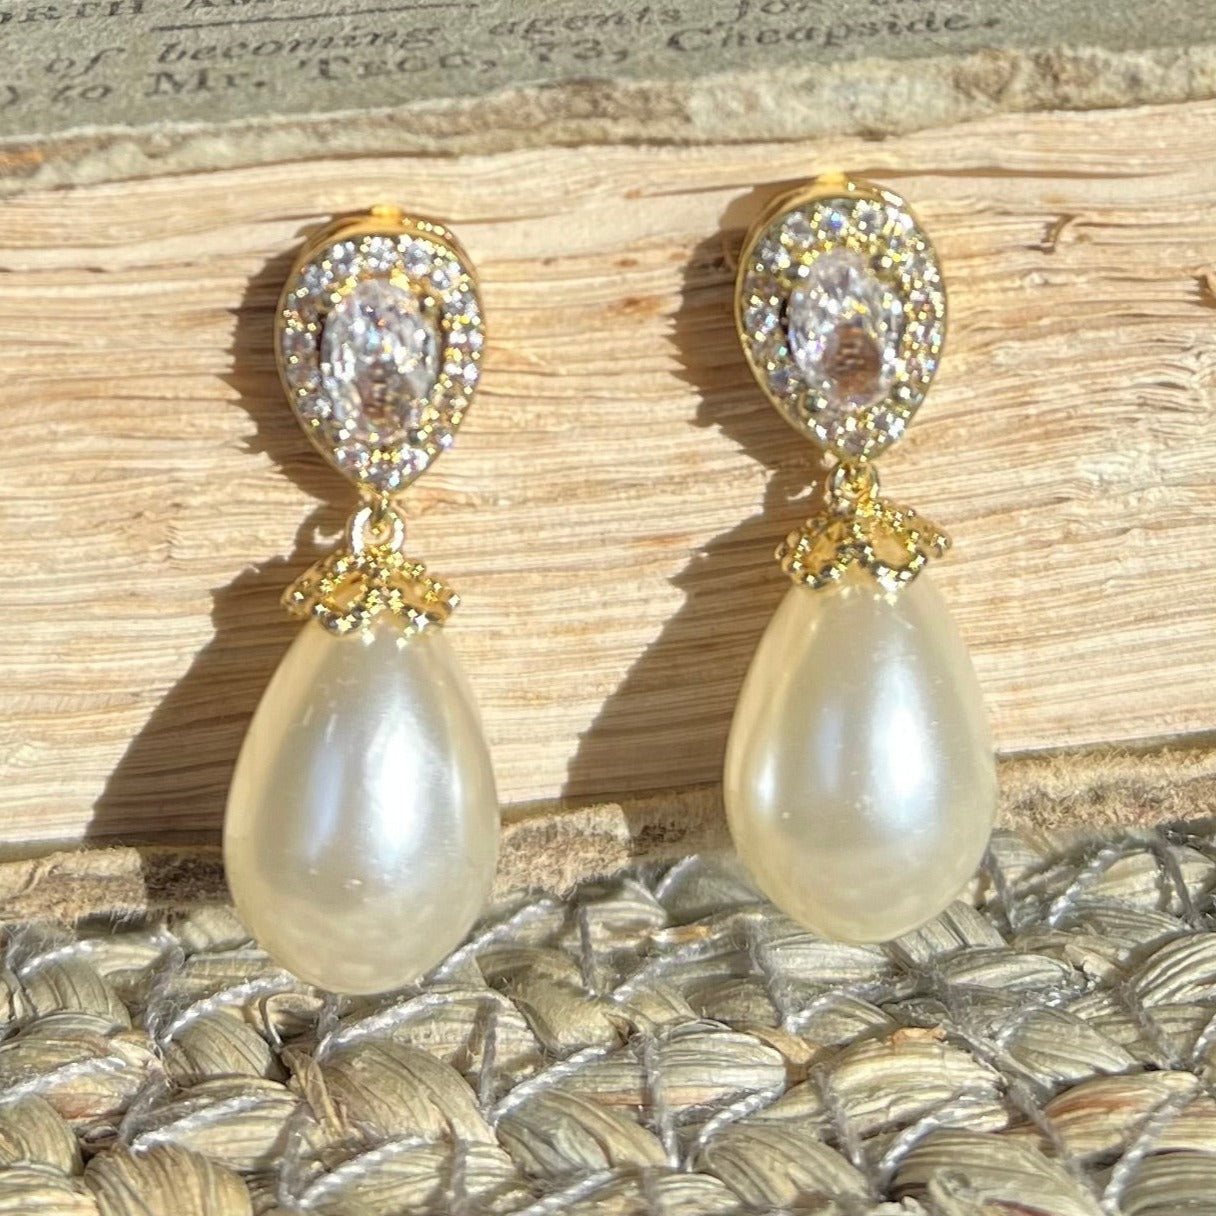 Christine, Crystal Pearl Drop Earrings in Gold